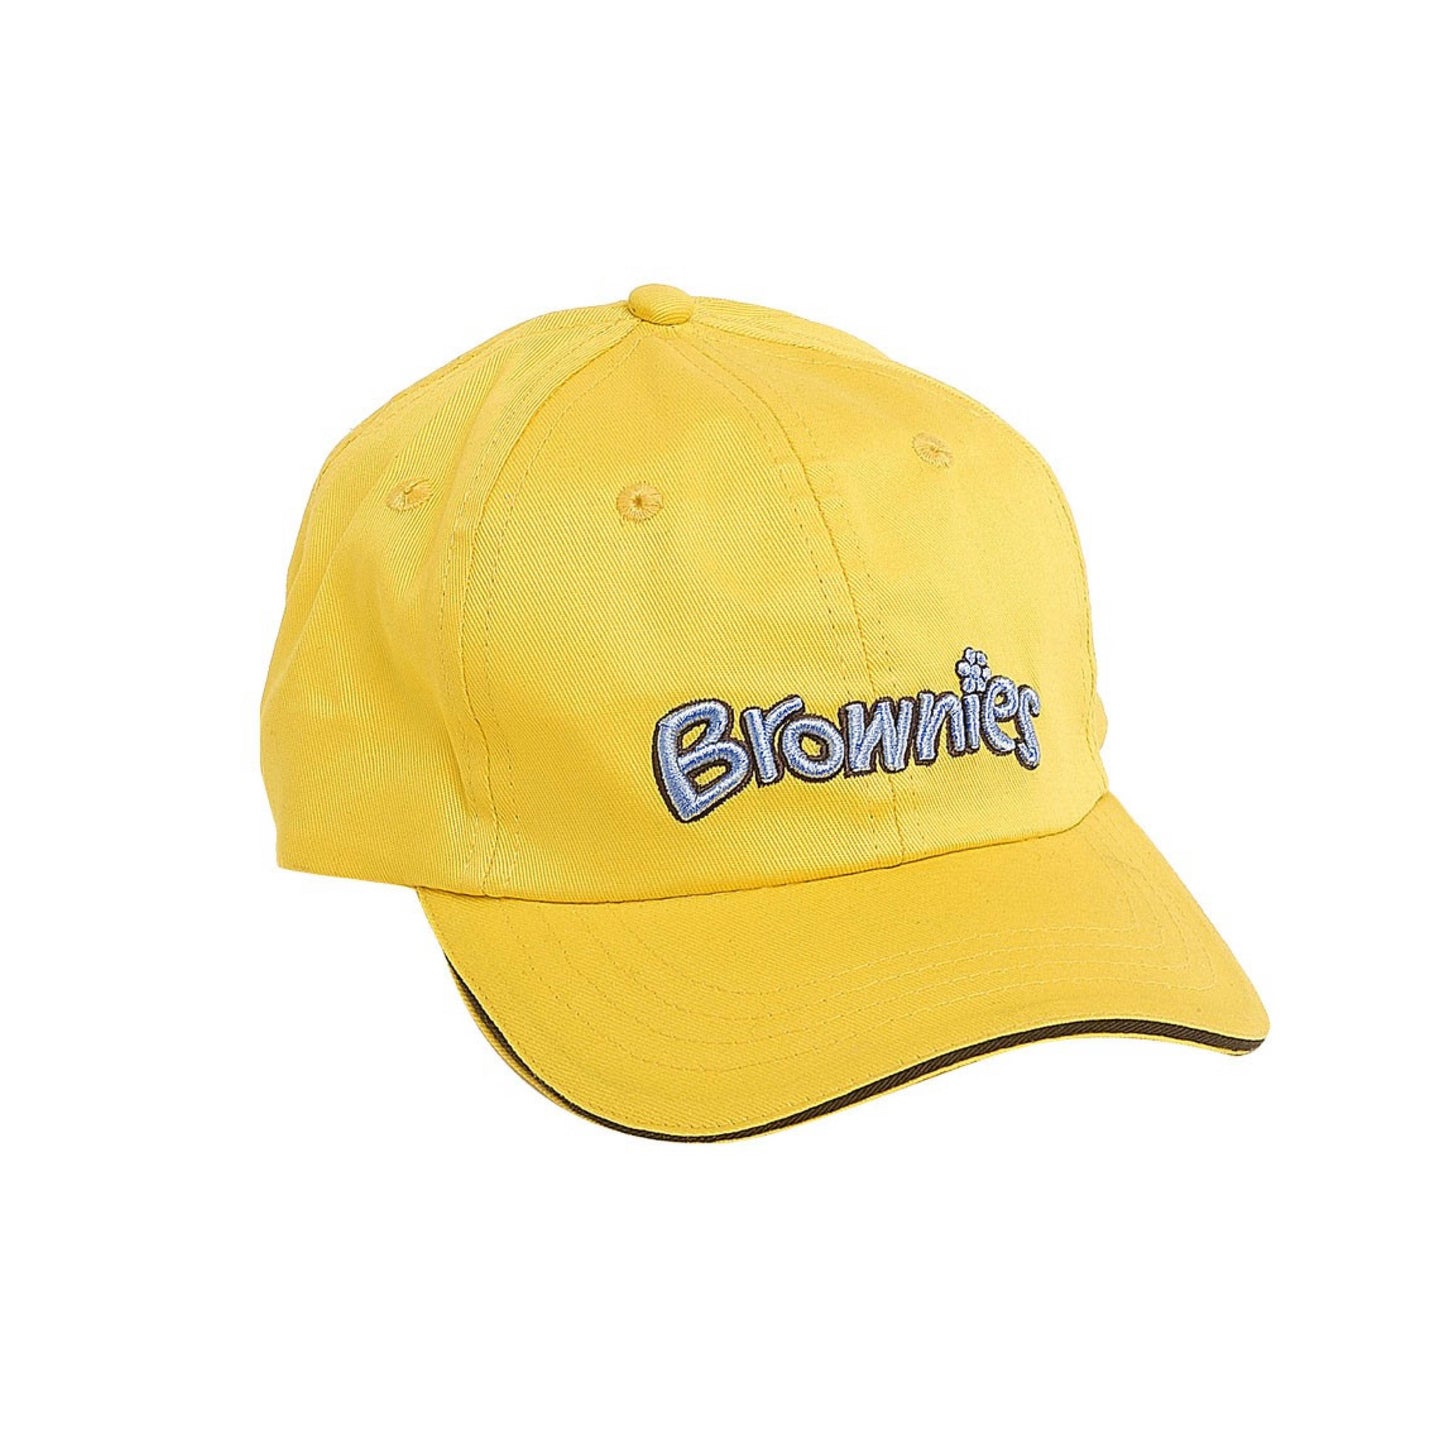 BROWNIES CAP – Parkers Online Ltd